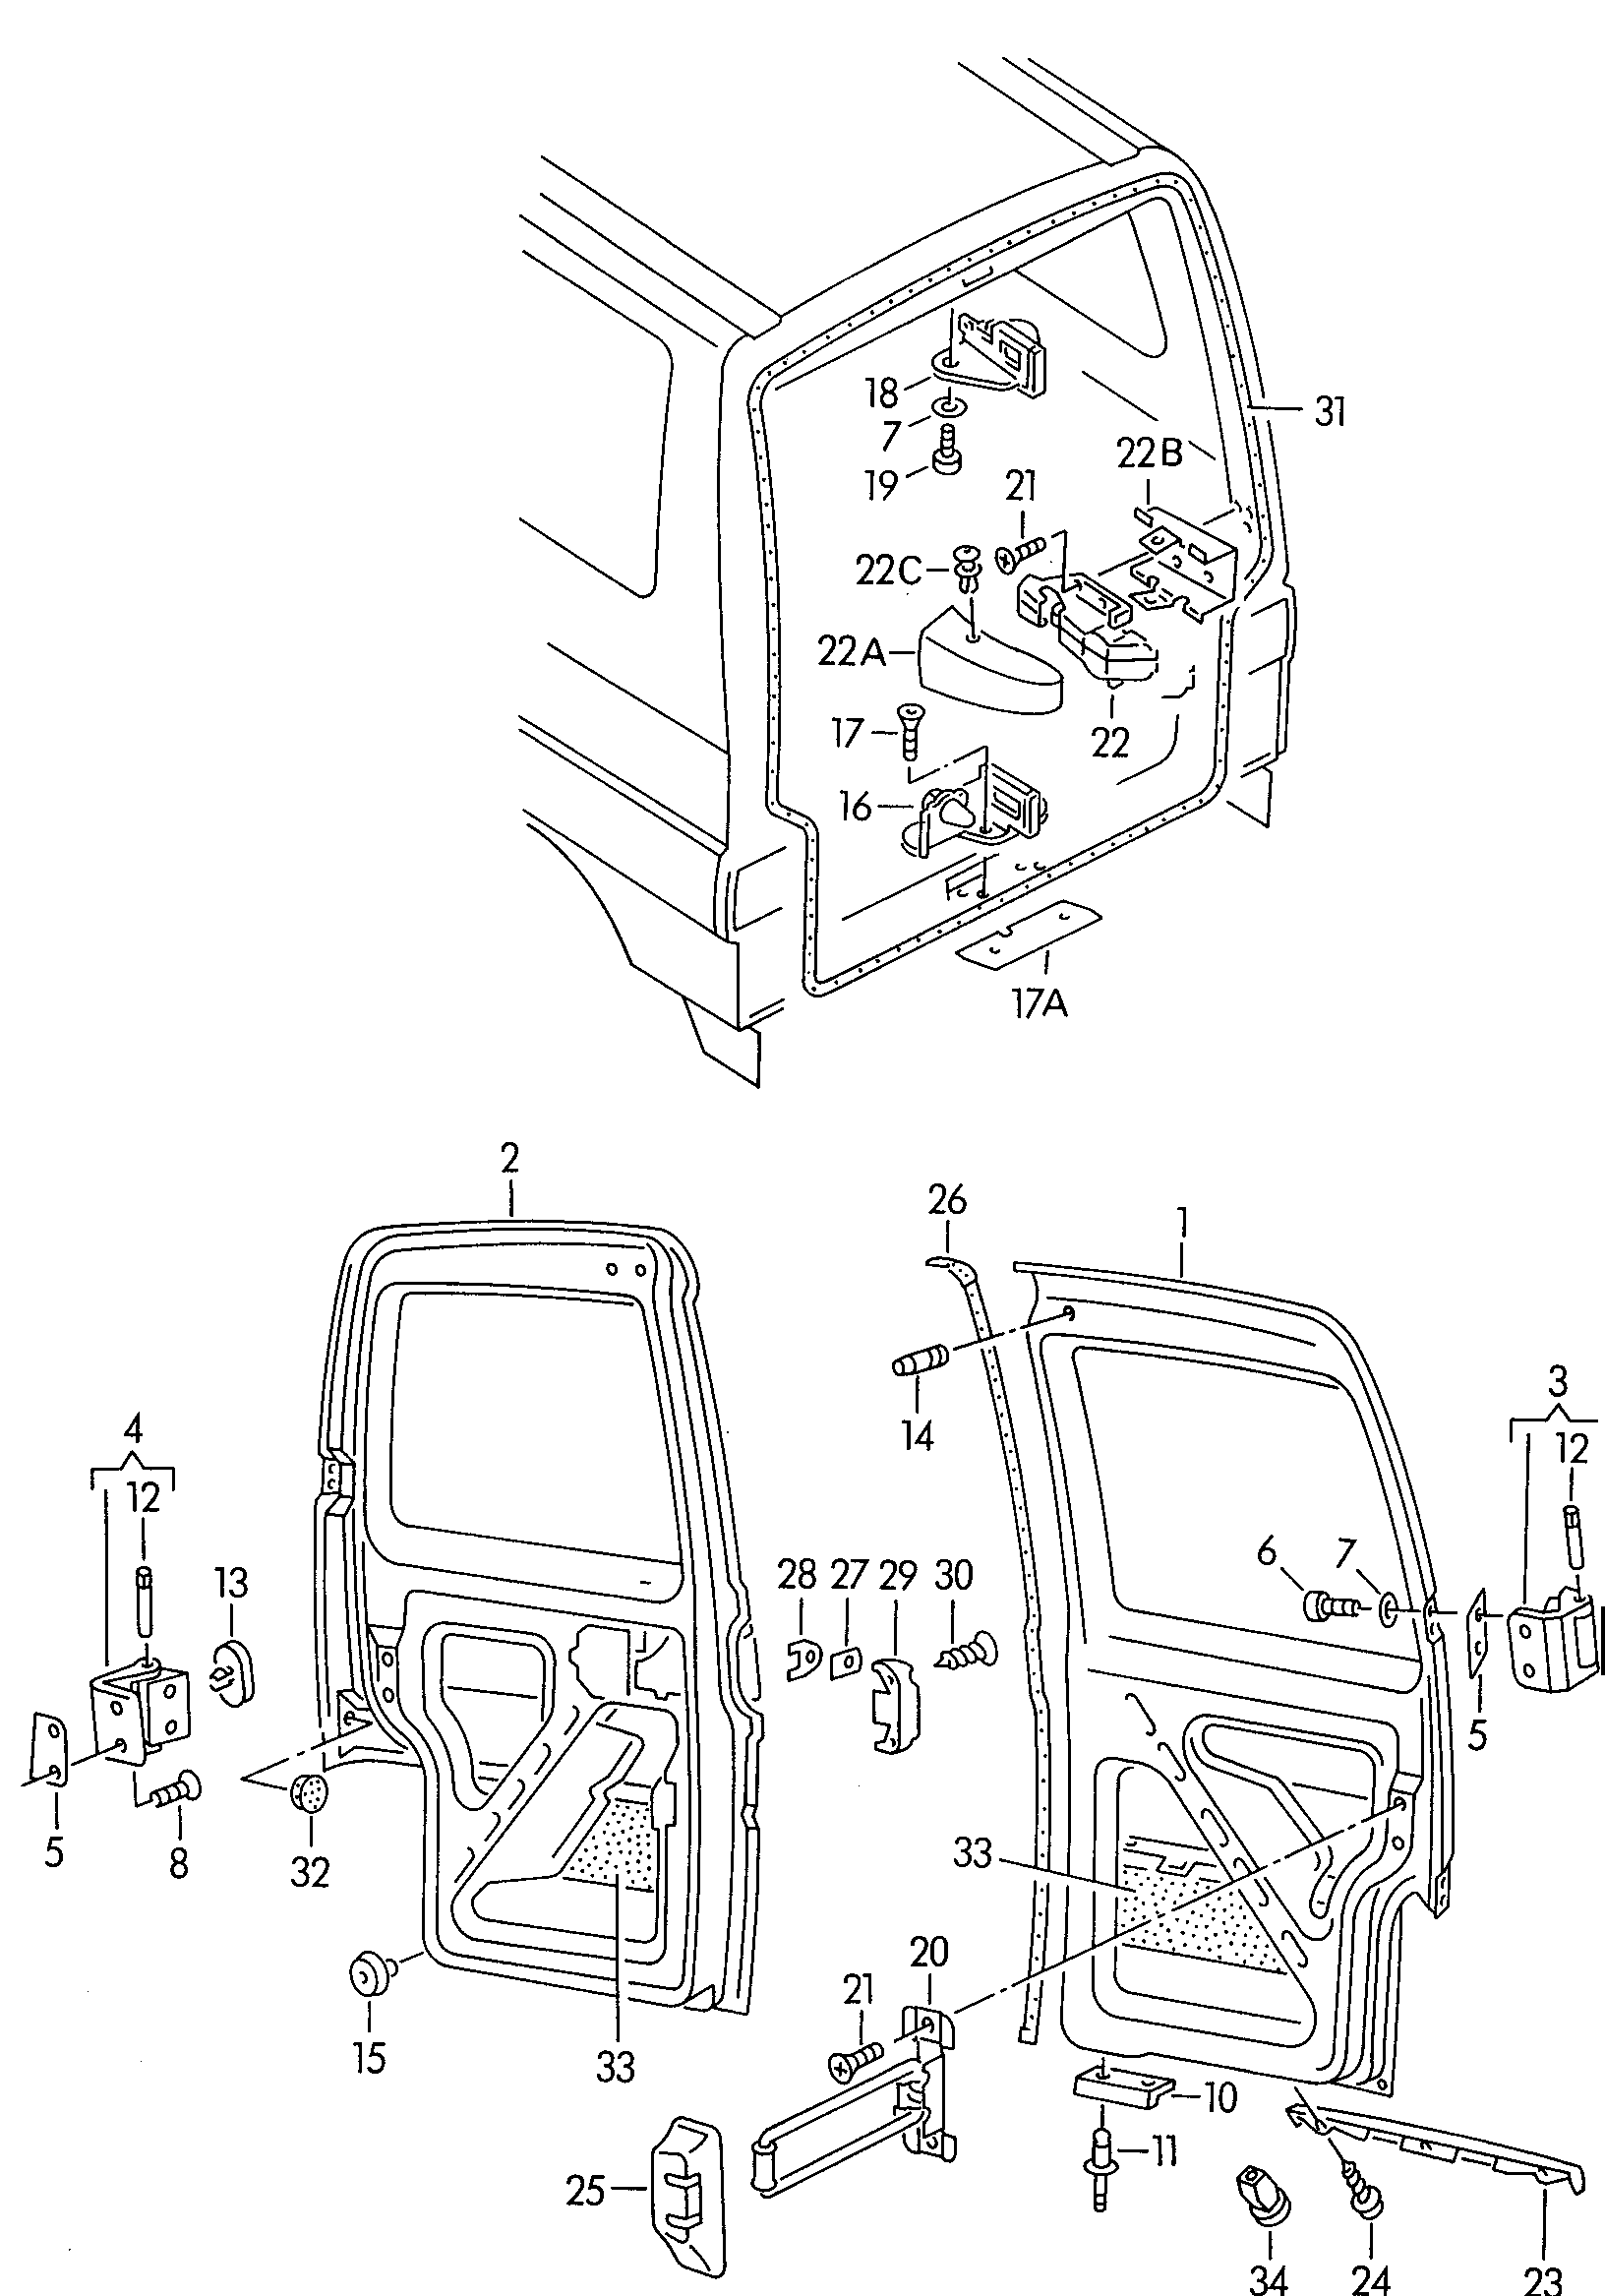 puertas doble hoja trasero - Transporter - tr